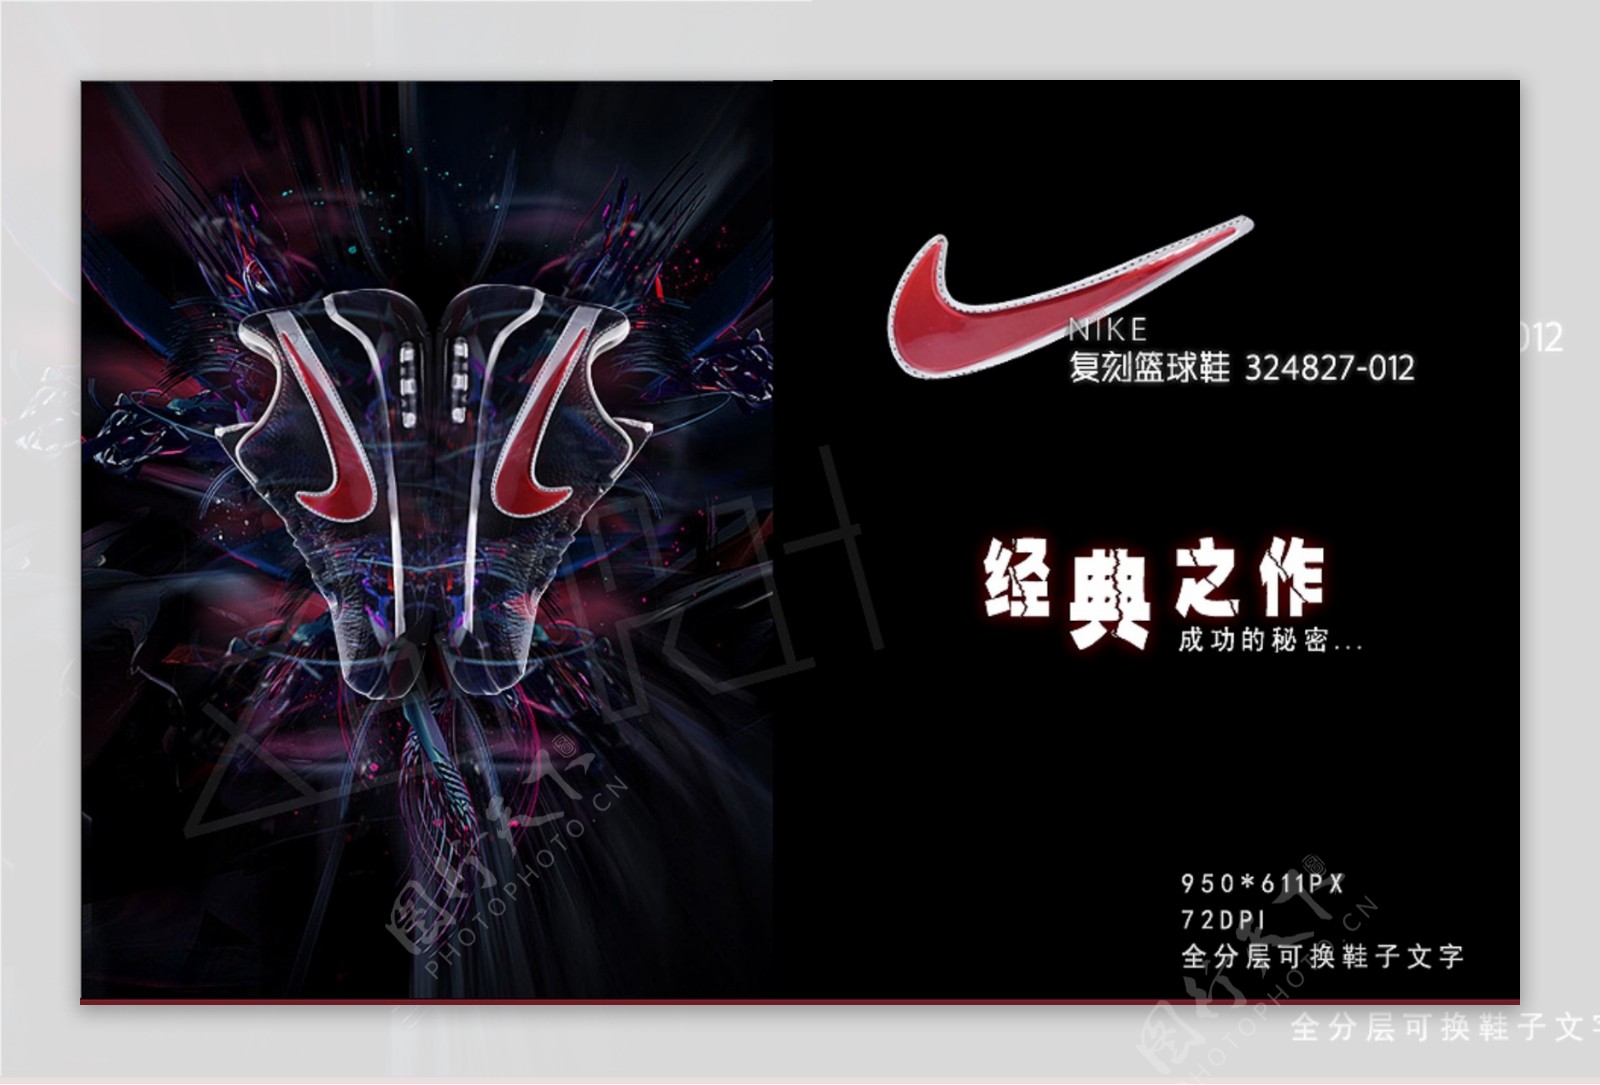 nike耐克经典运动篮球鞋网页广告海报图片